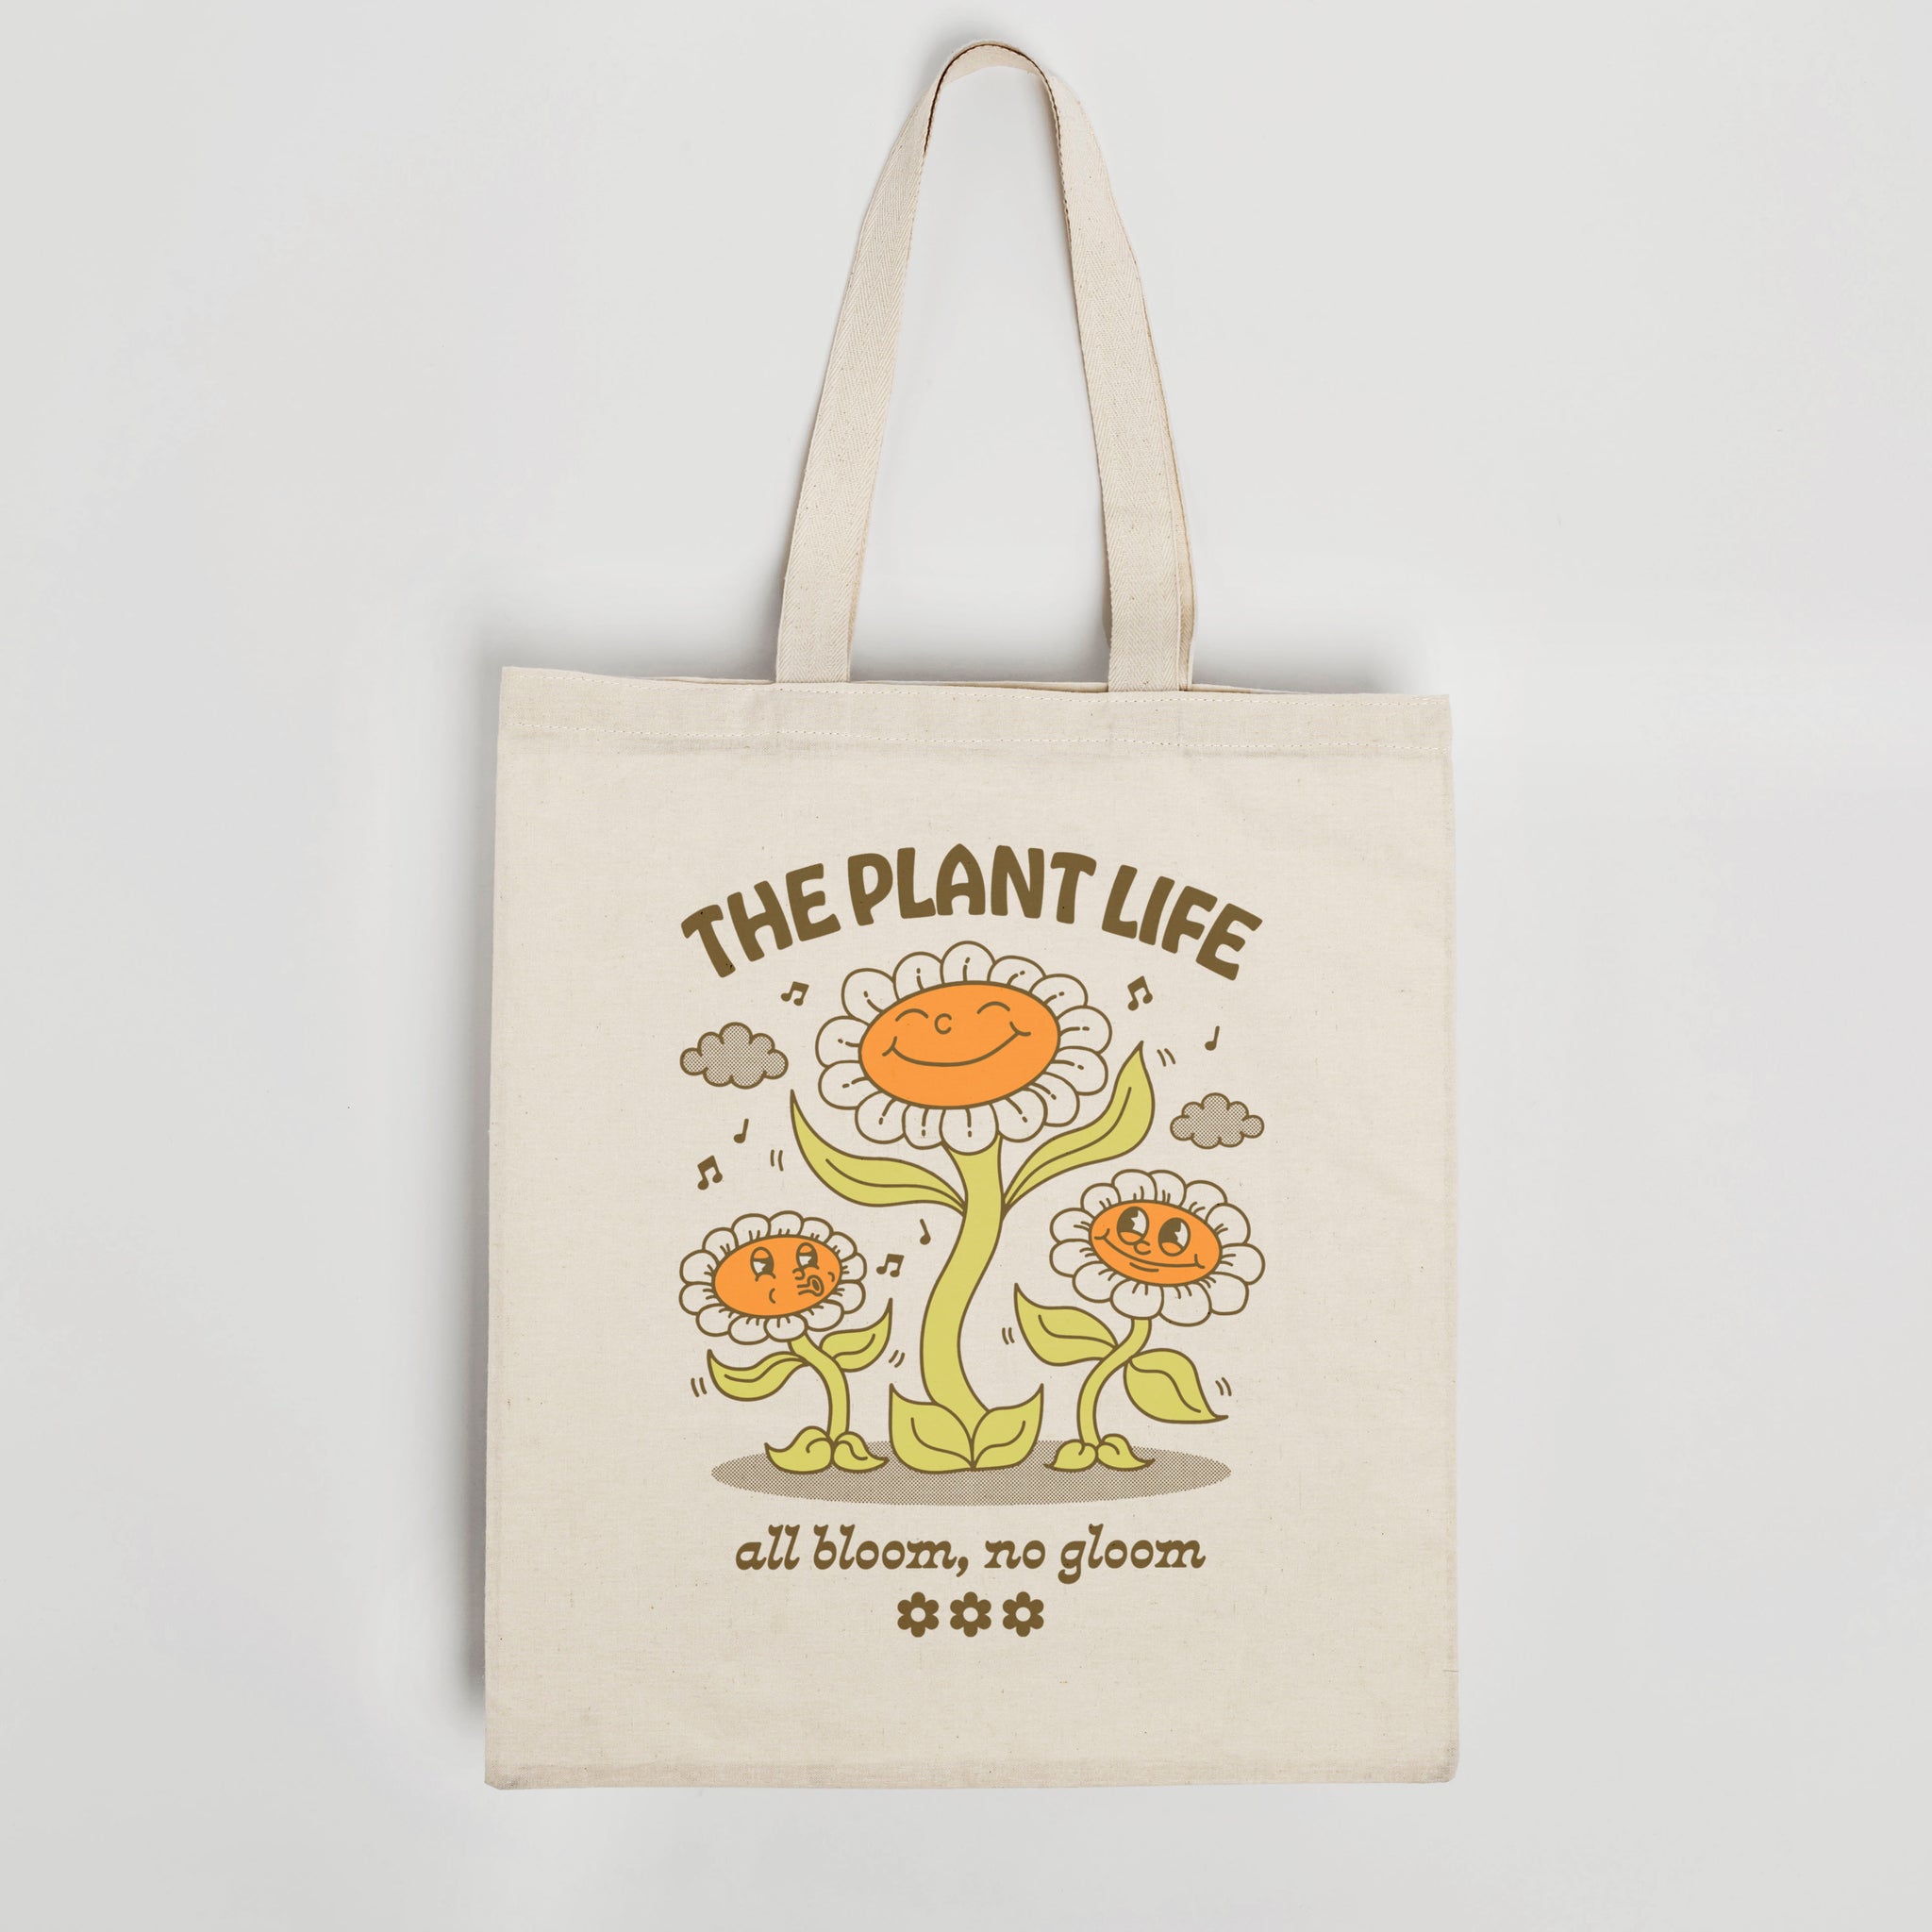 'The Plant Life' organic cotton canvas tote bag